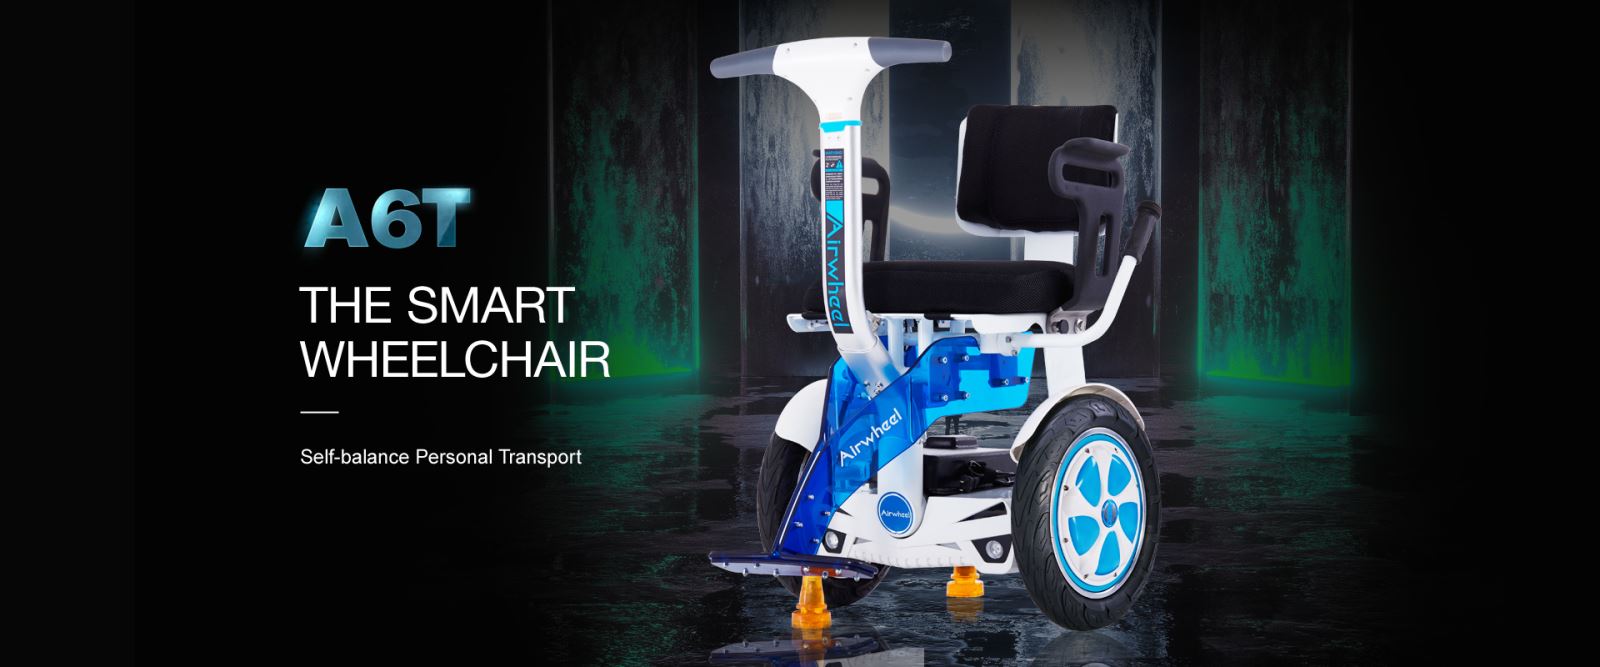 Airwheel A6T Smart wheelchair